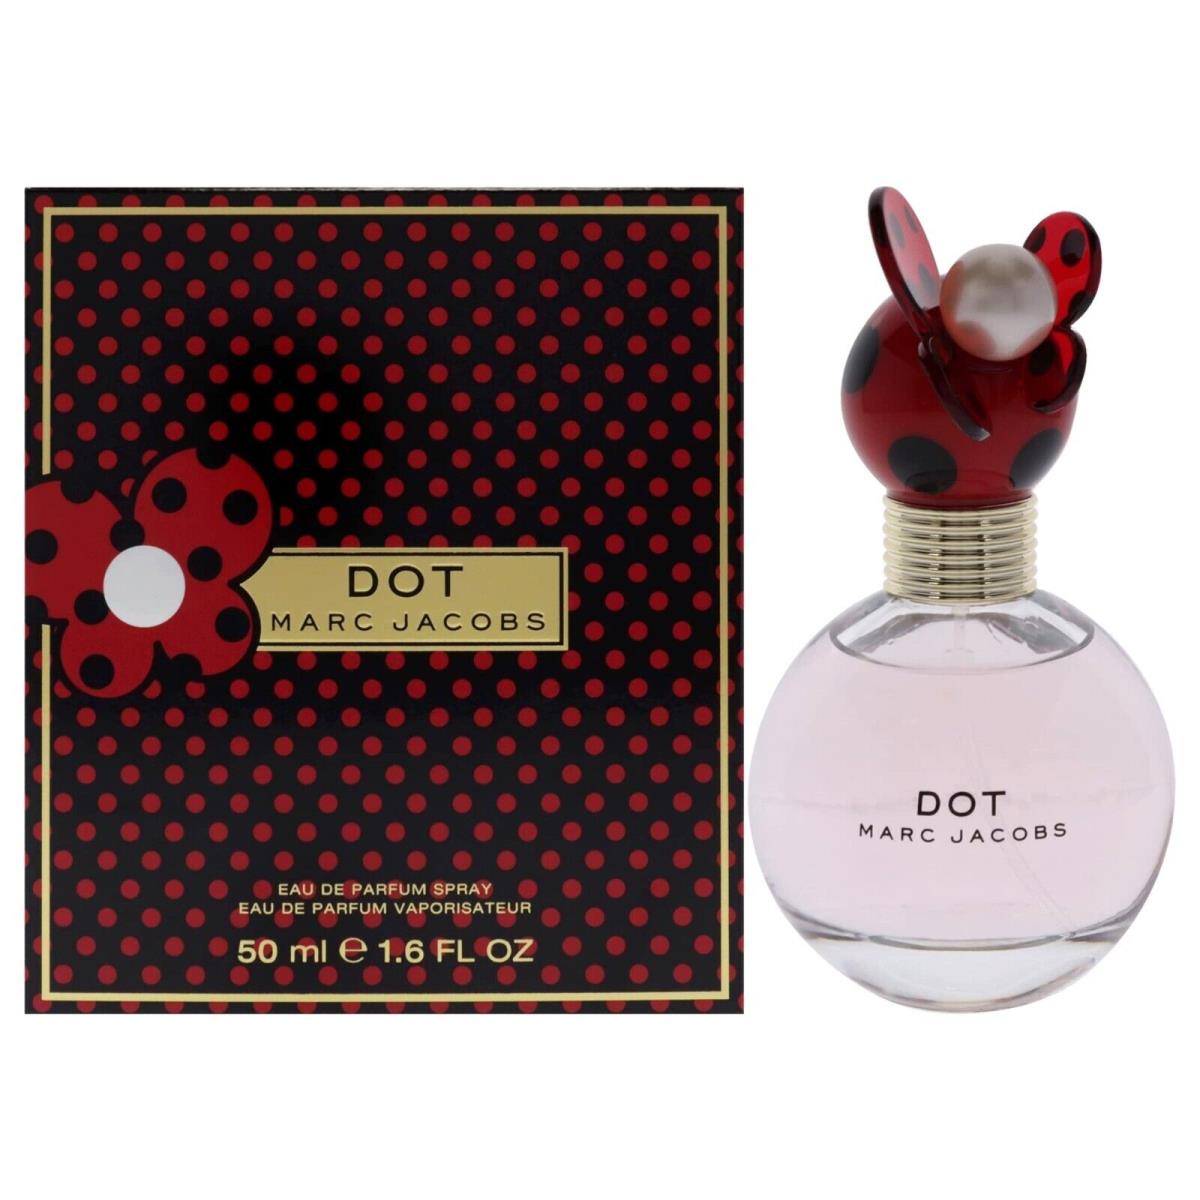 Marc Jacobs Dot Eau De Parfum Perfume 1.6 Fl Oz Spray in A Box